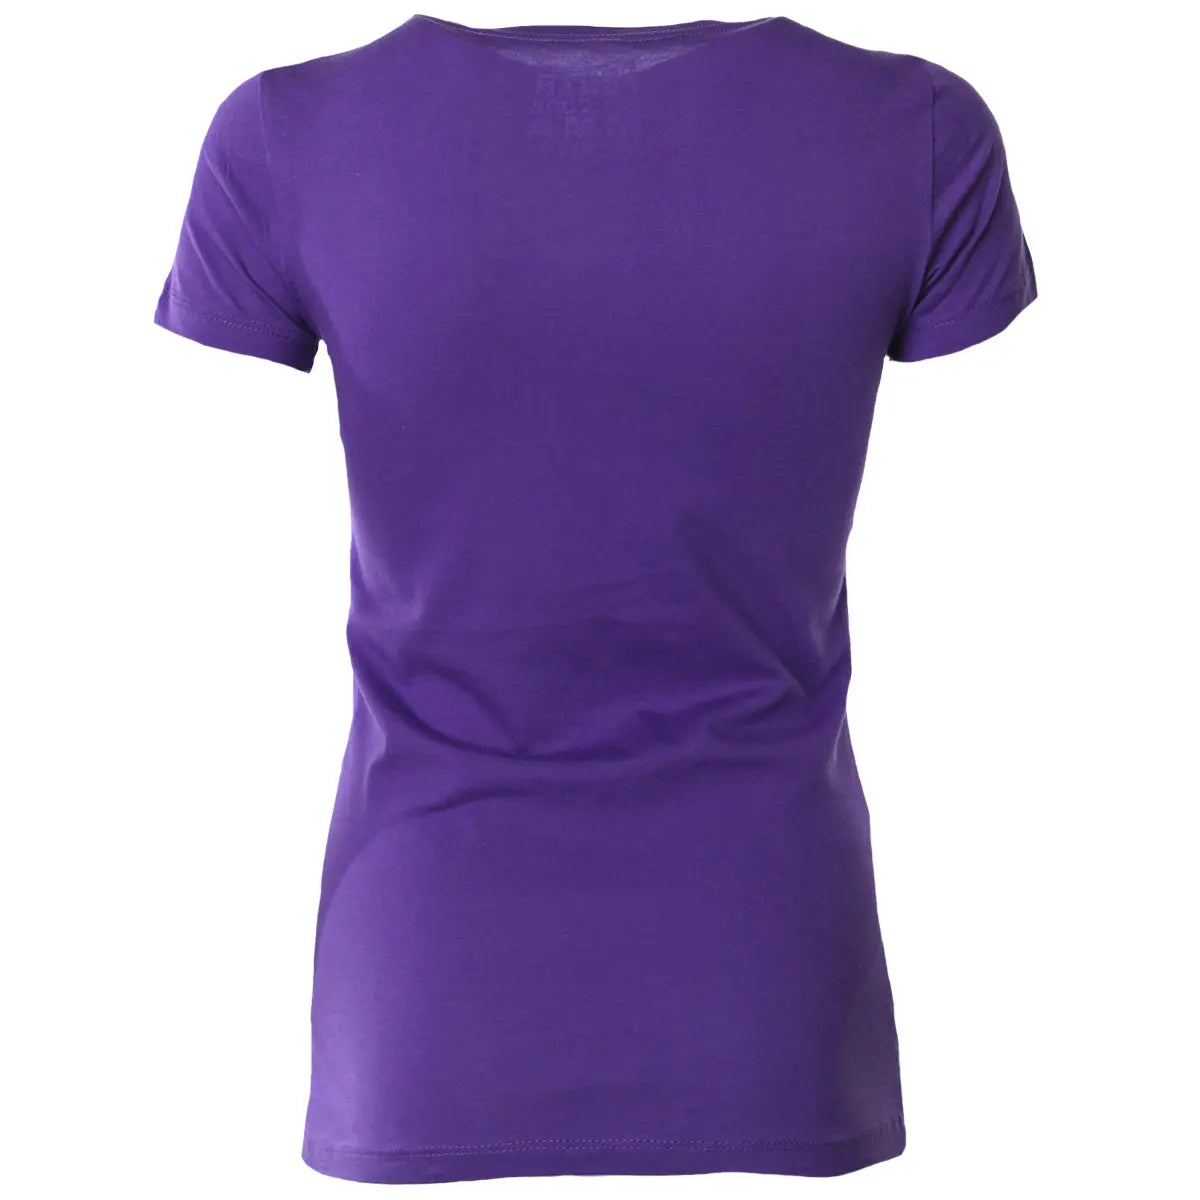 Forza Sports Women's "Origins" MMA T-Shirt - Purple Rush Forza Sports